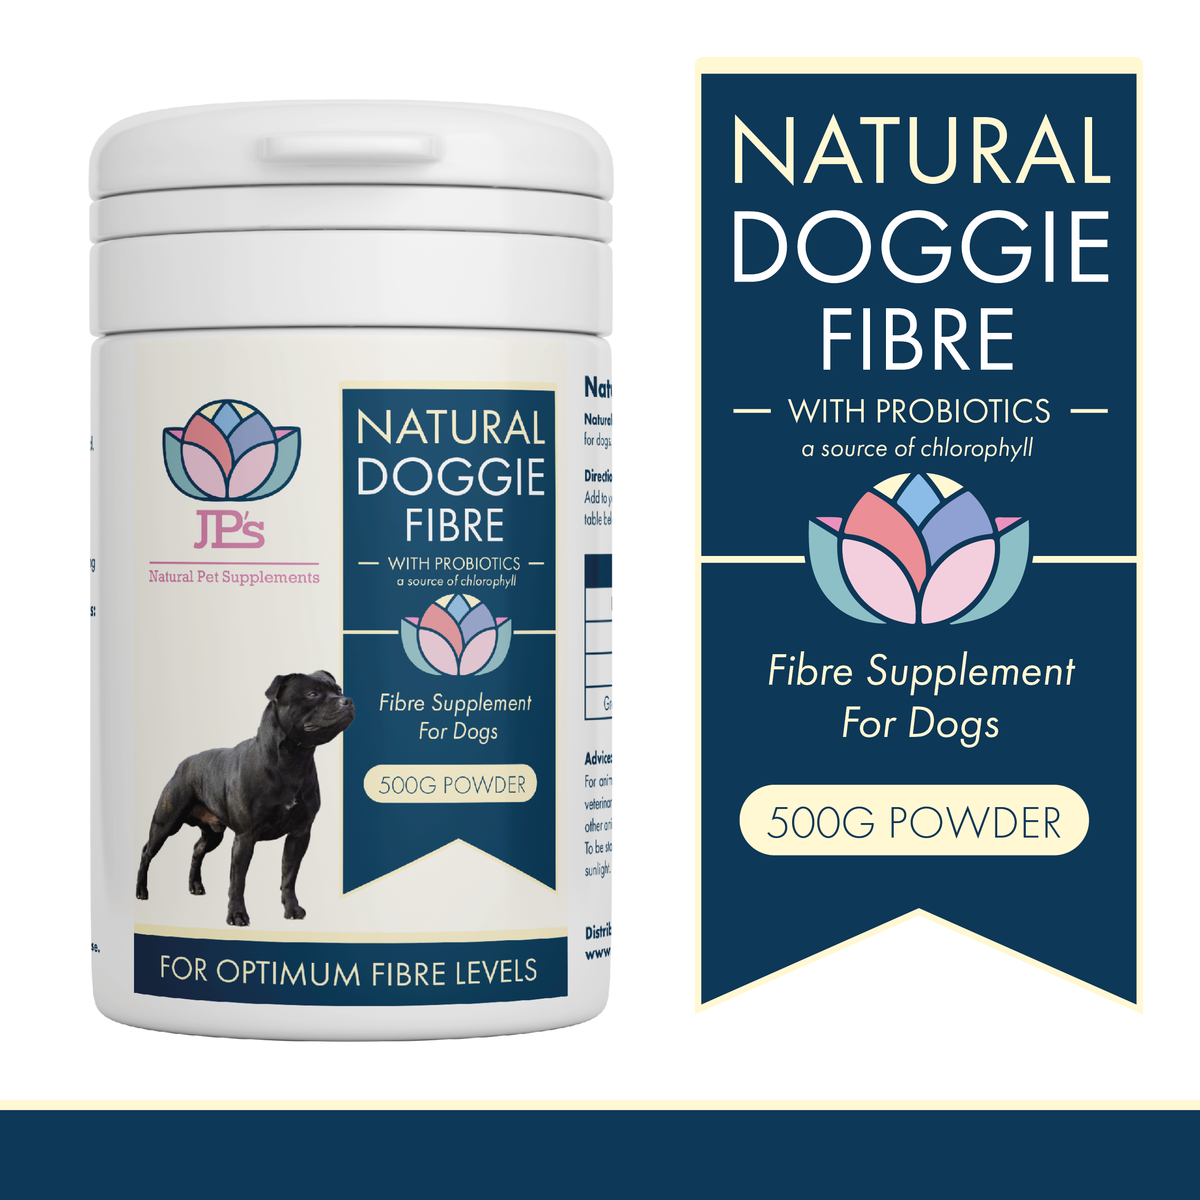 Natural Doggie Fibre with probiotics